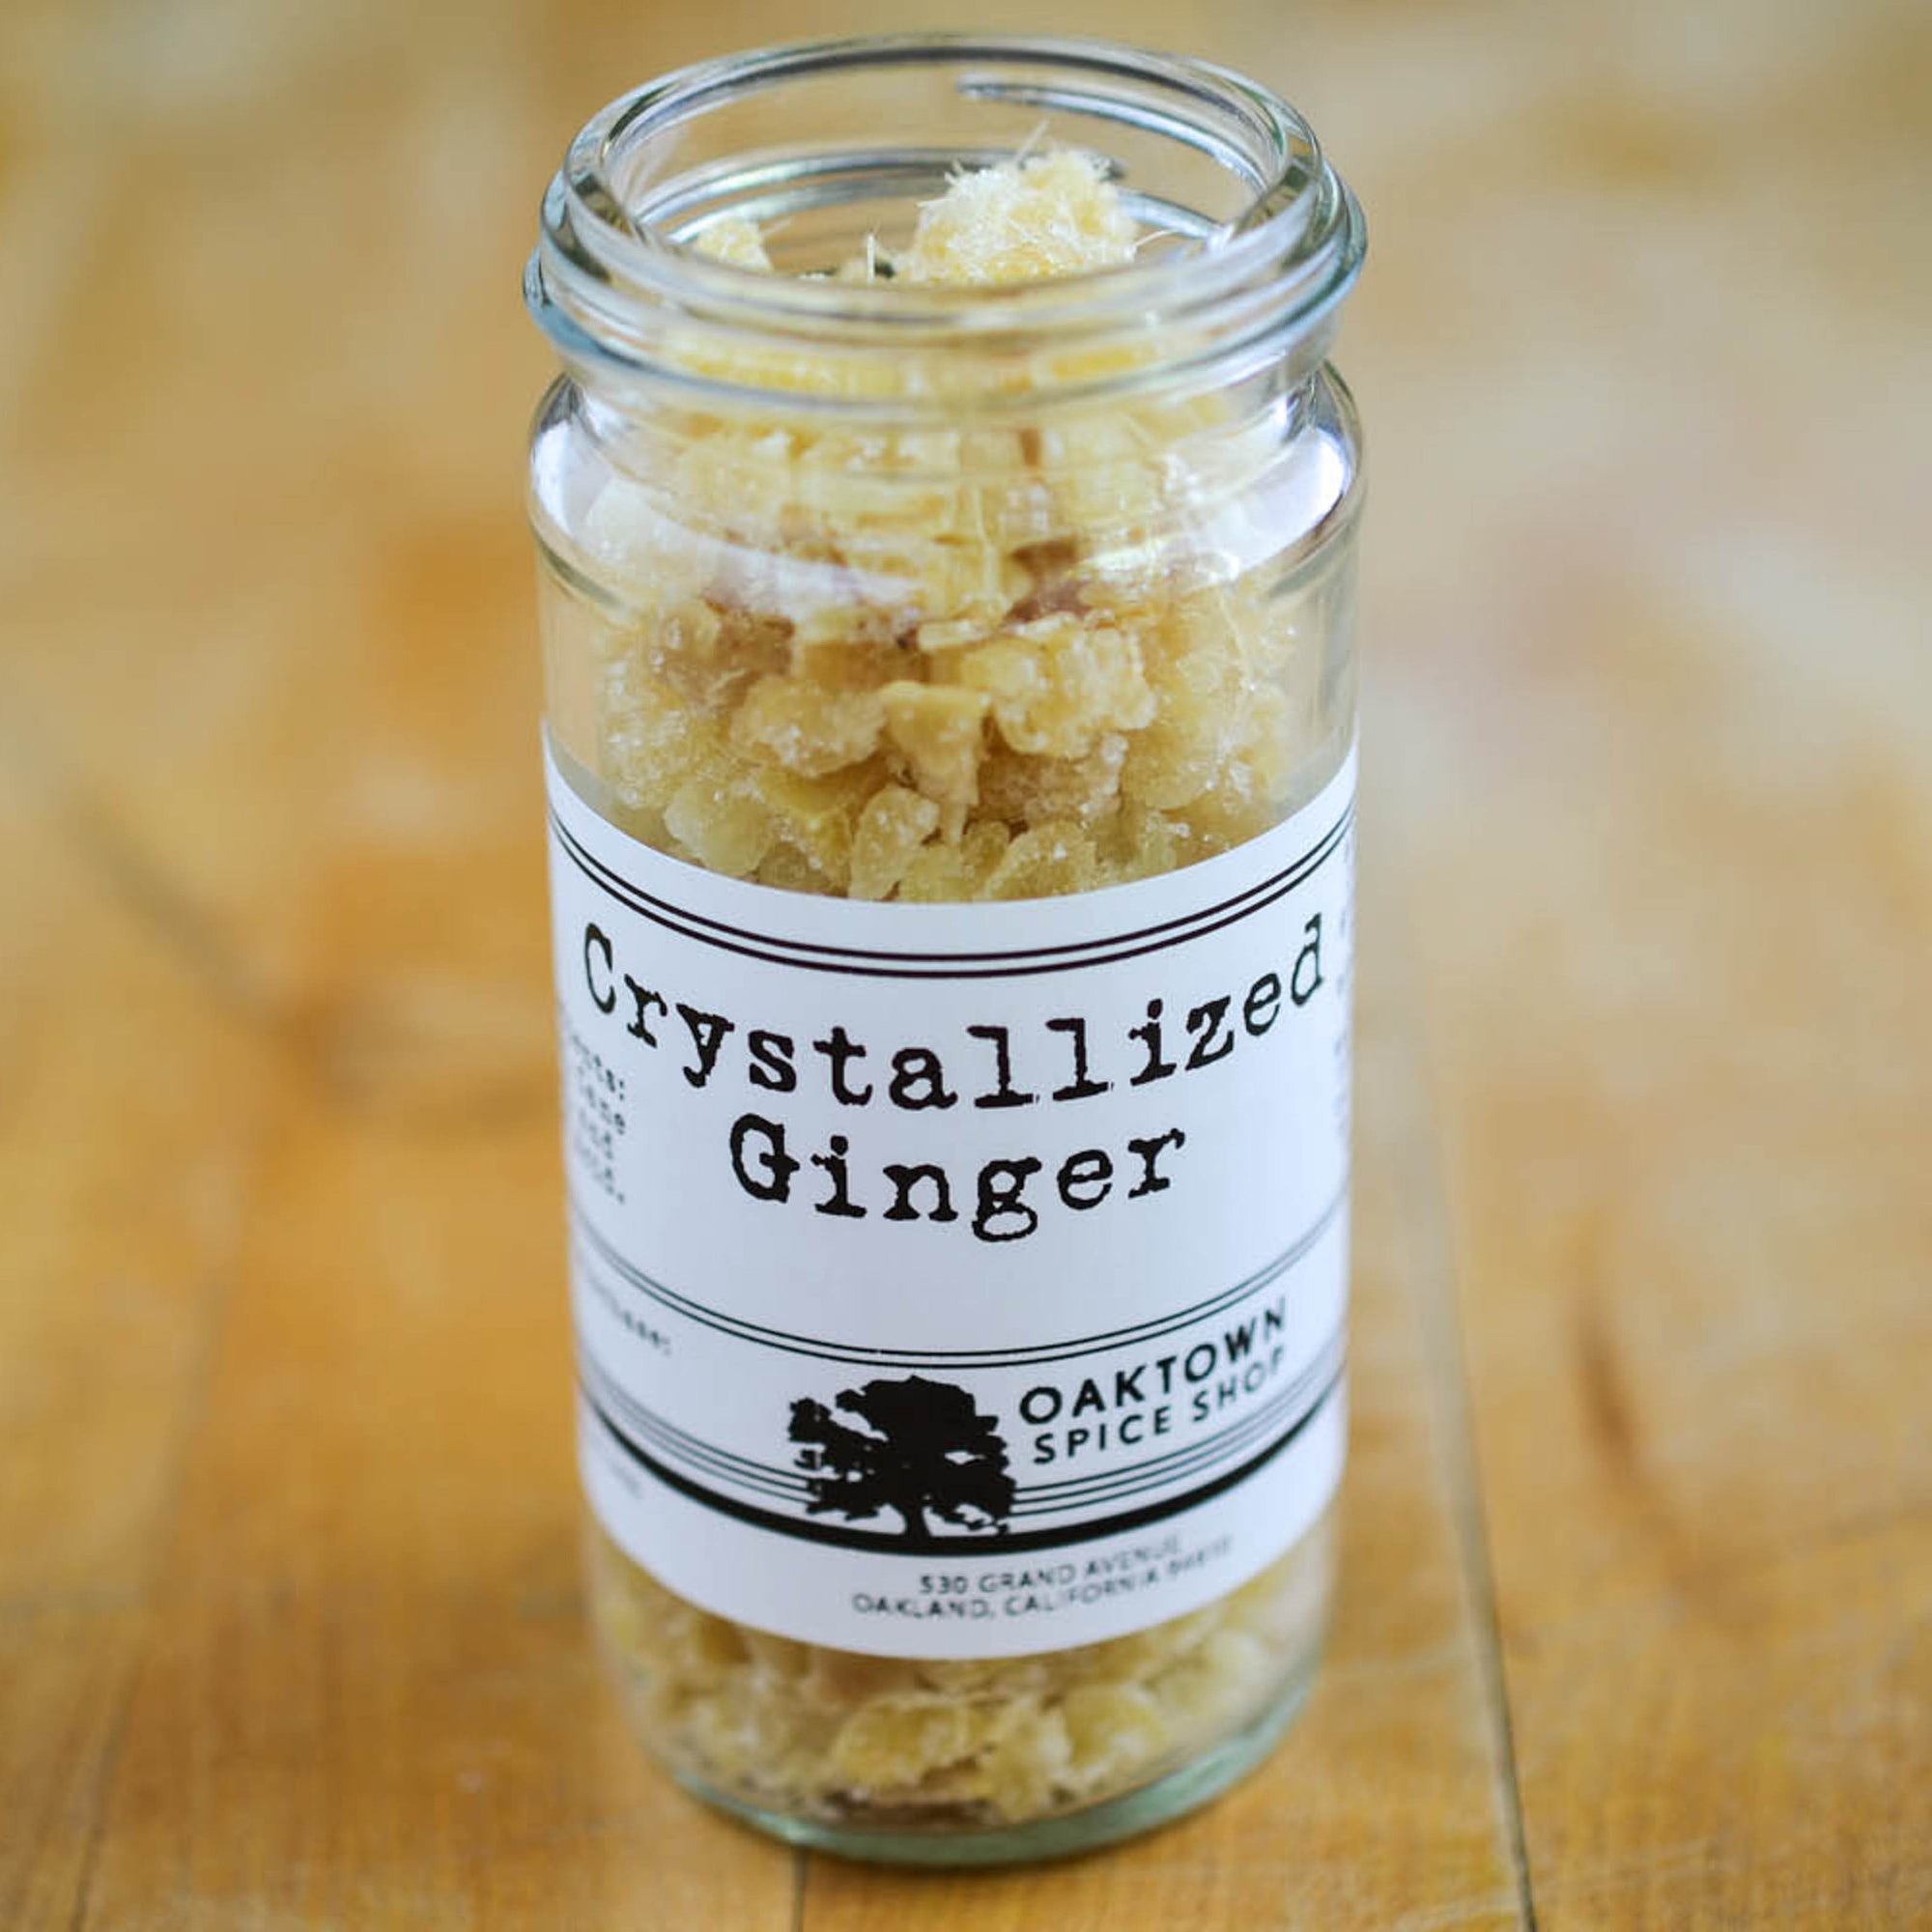 Crystallized Ginger at Oaktown Spice Shop